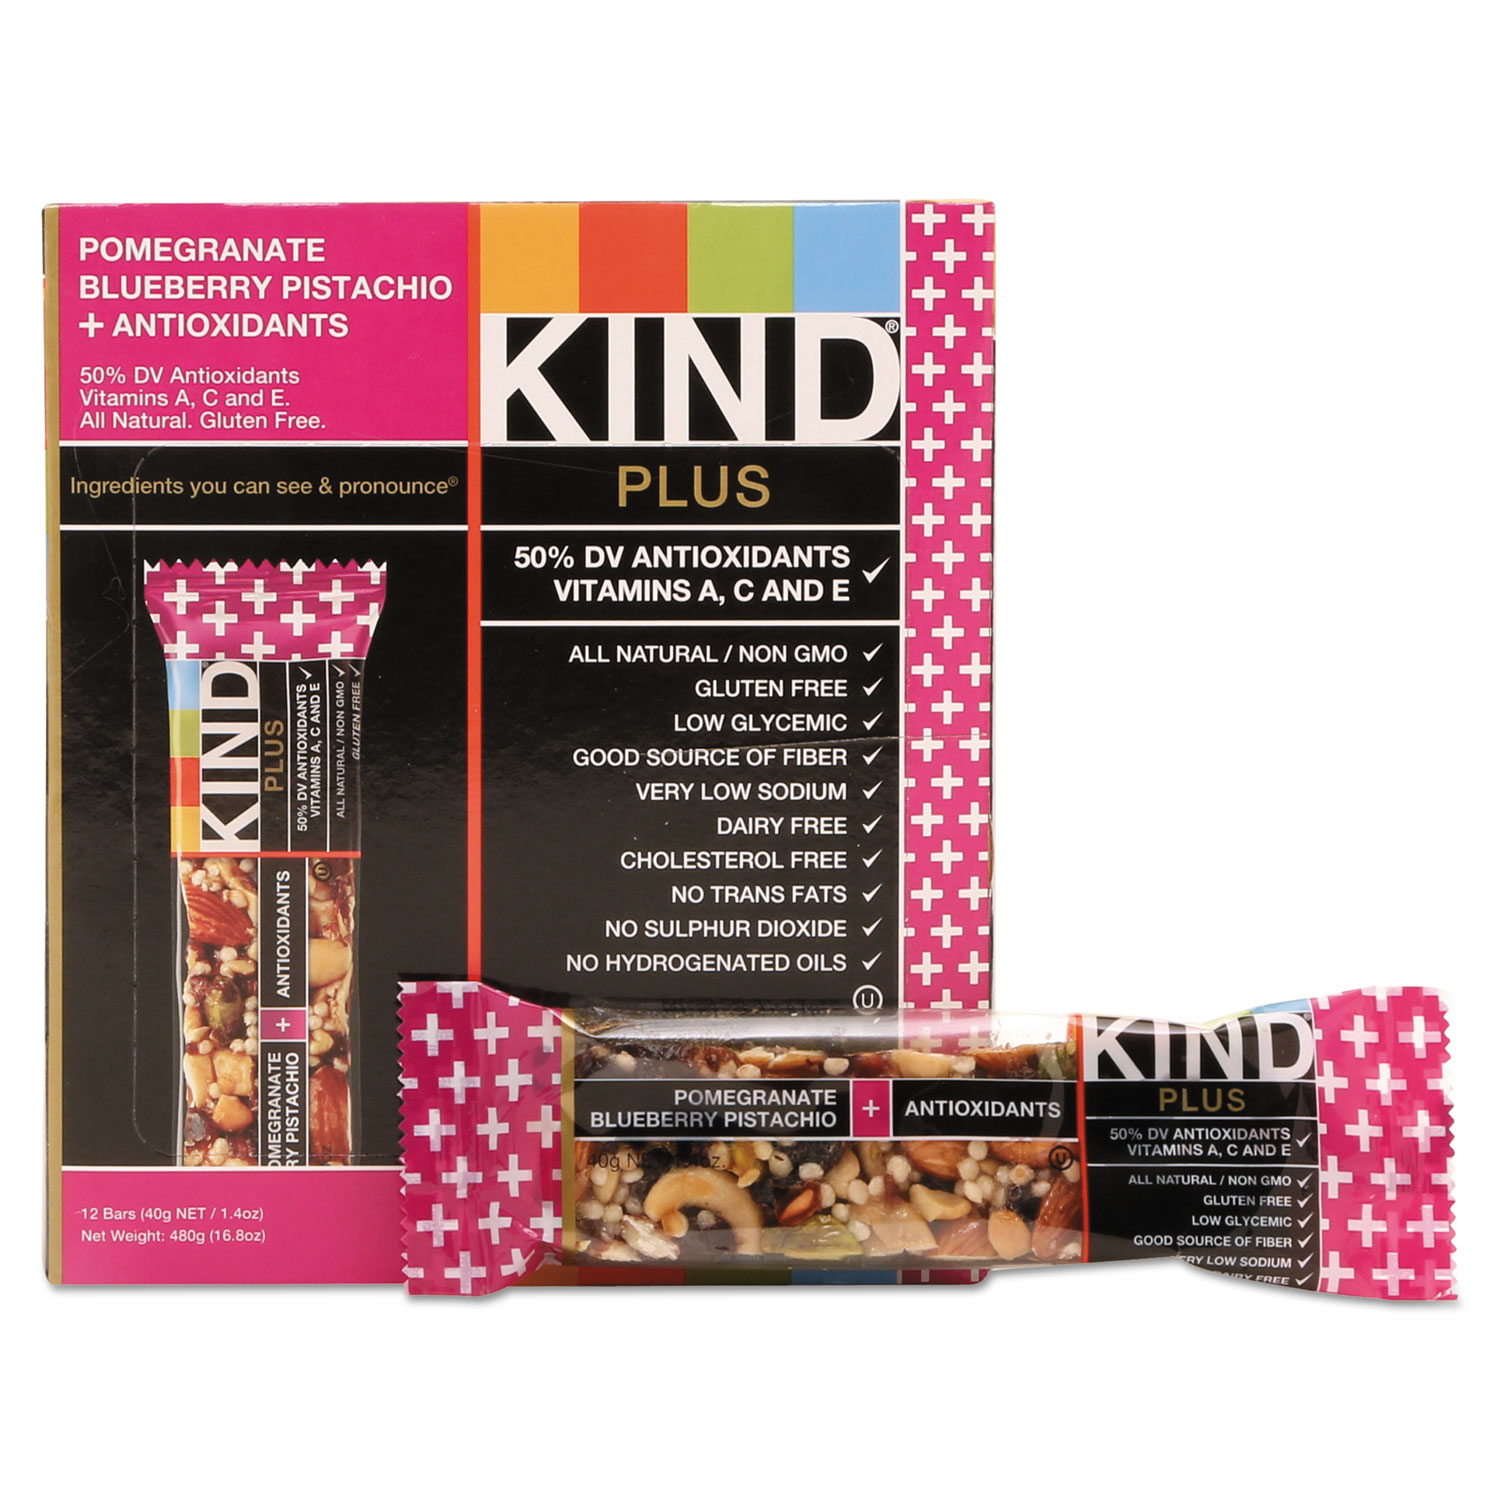  KIND 17221 Plus Nutrition Boost Bar, Pom. Blueberry Pistachio/Antioxidants, 1.4 oz, 12/Box (KND17221) 